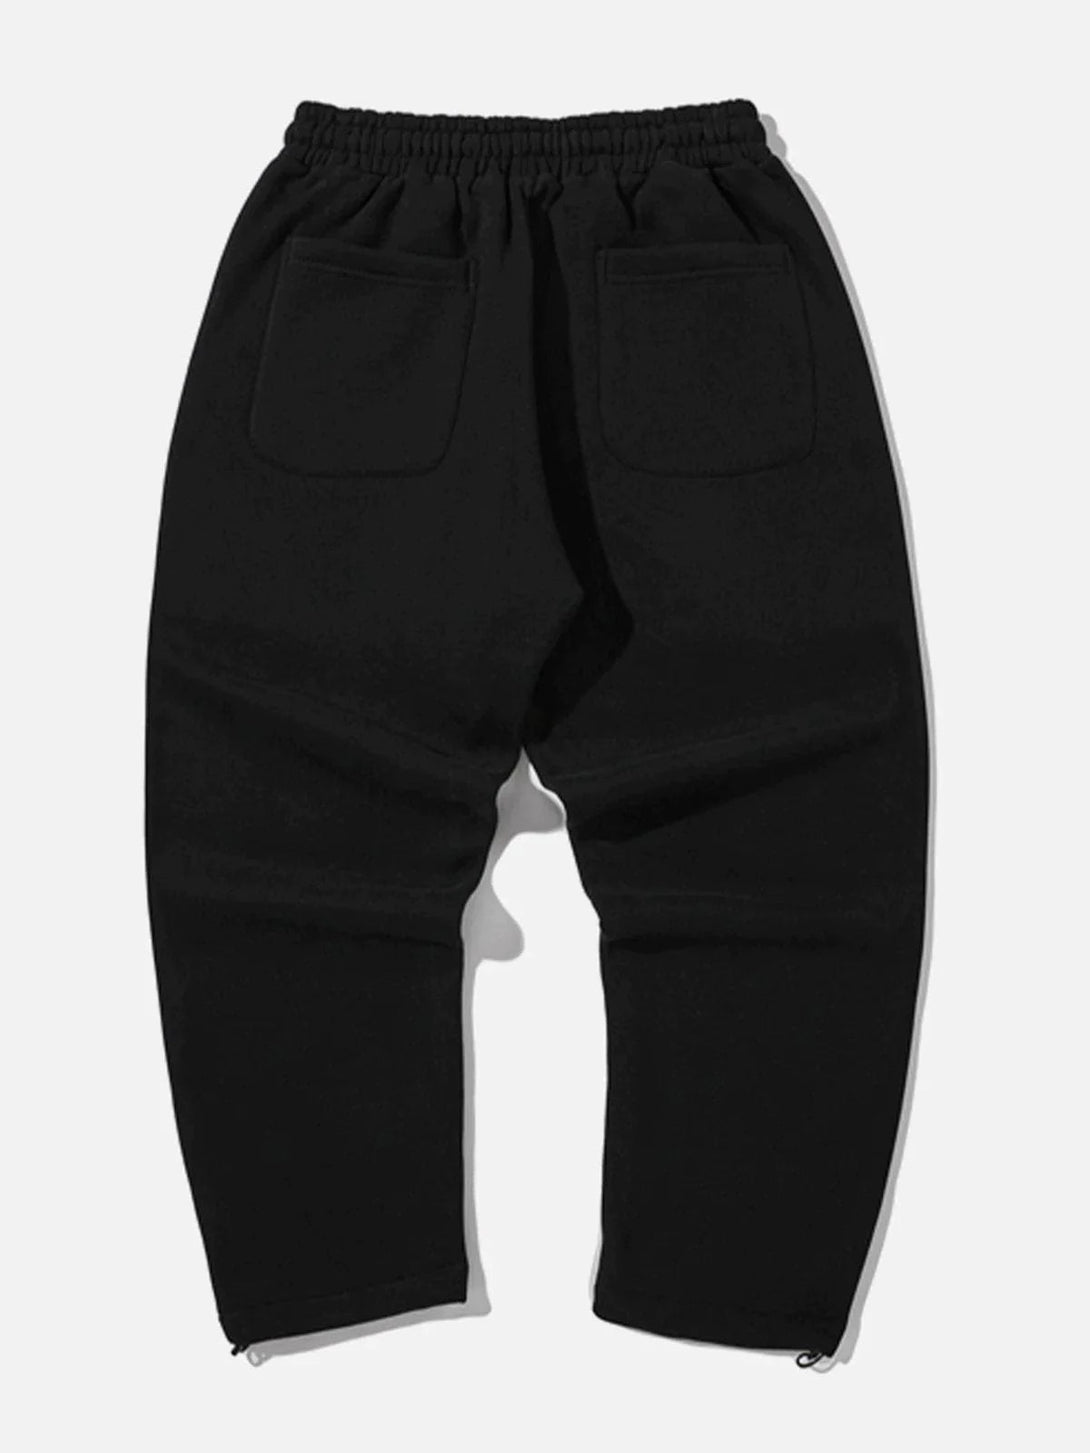 Majesda® - Printed Drawstring Pants outfit ideas streetwear fashion